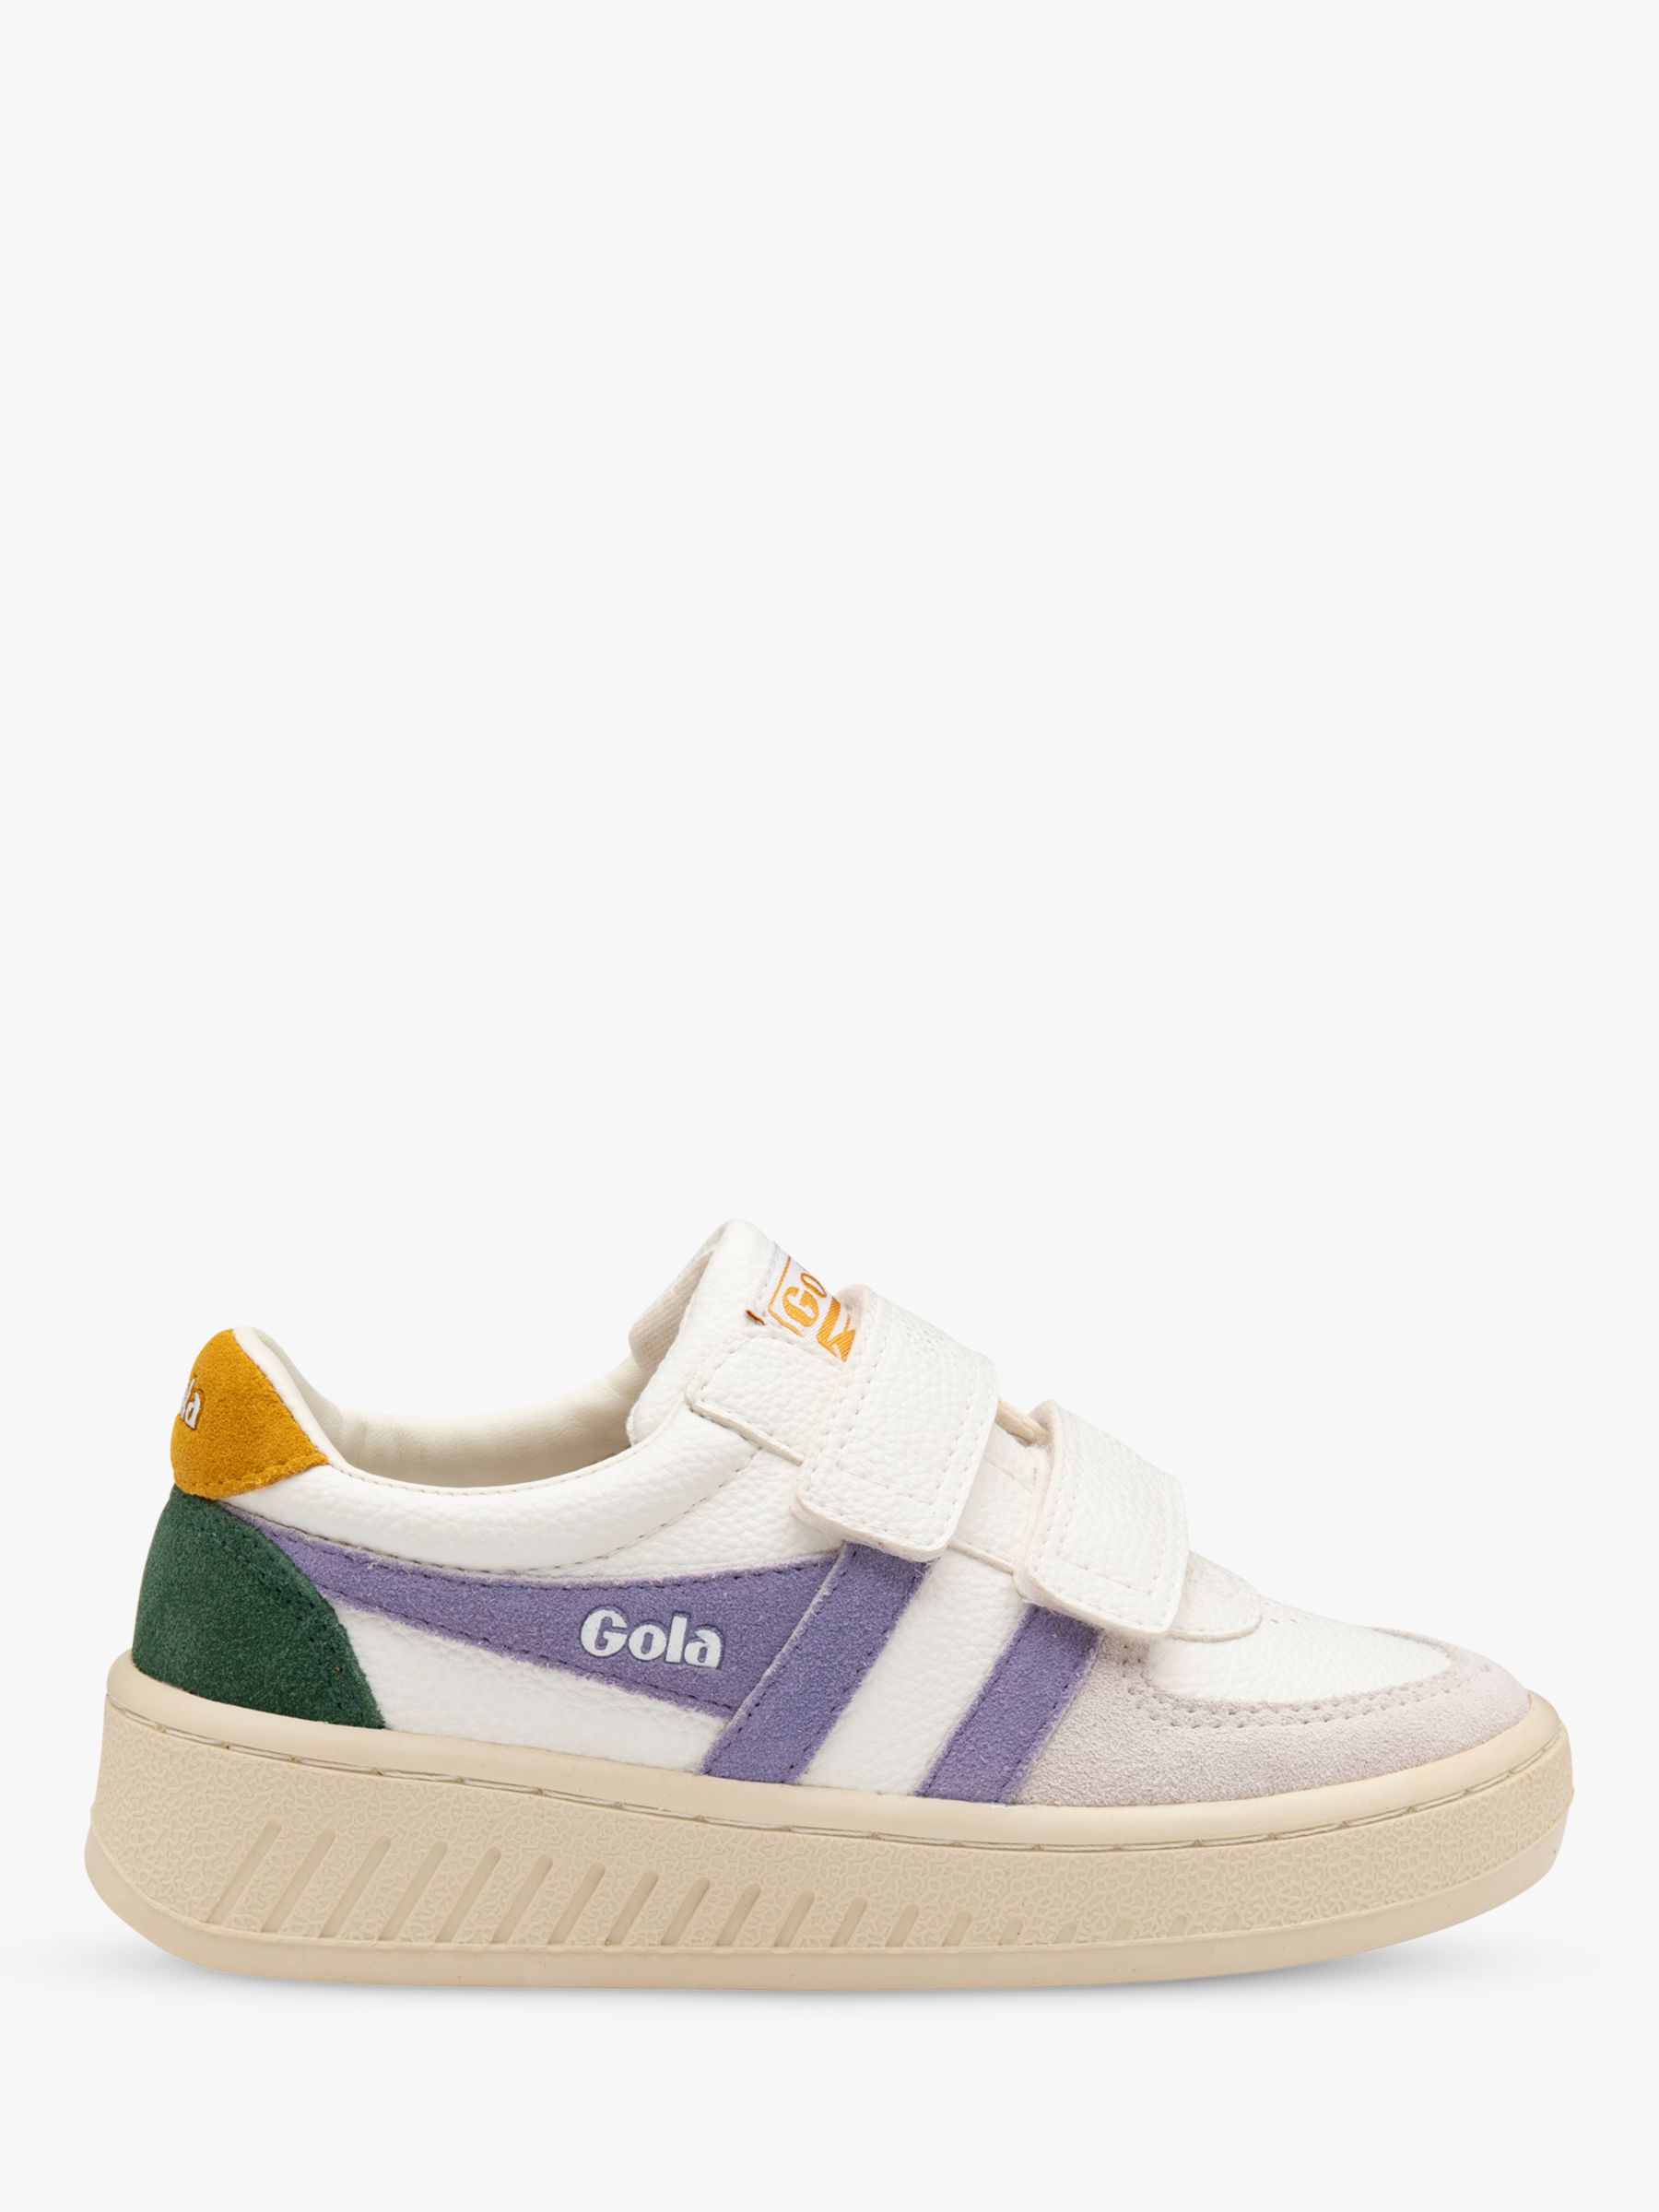 Gola Kids' Grand Slam Trident Riptape Shoes, White/Lavender/Sun, 10 Jnr